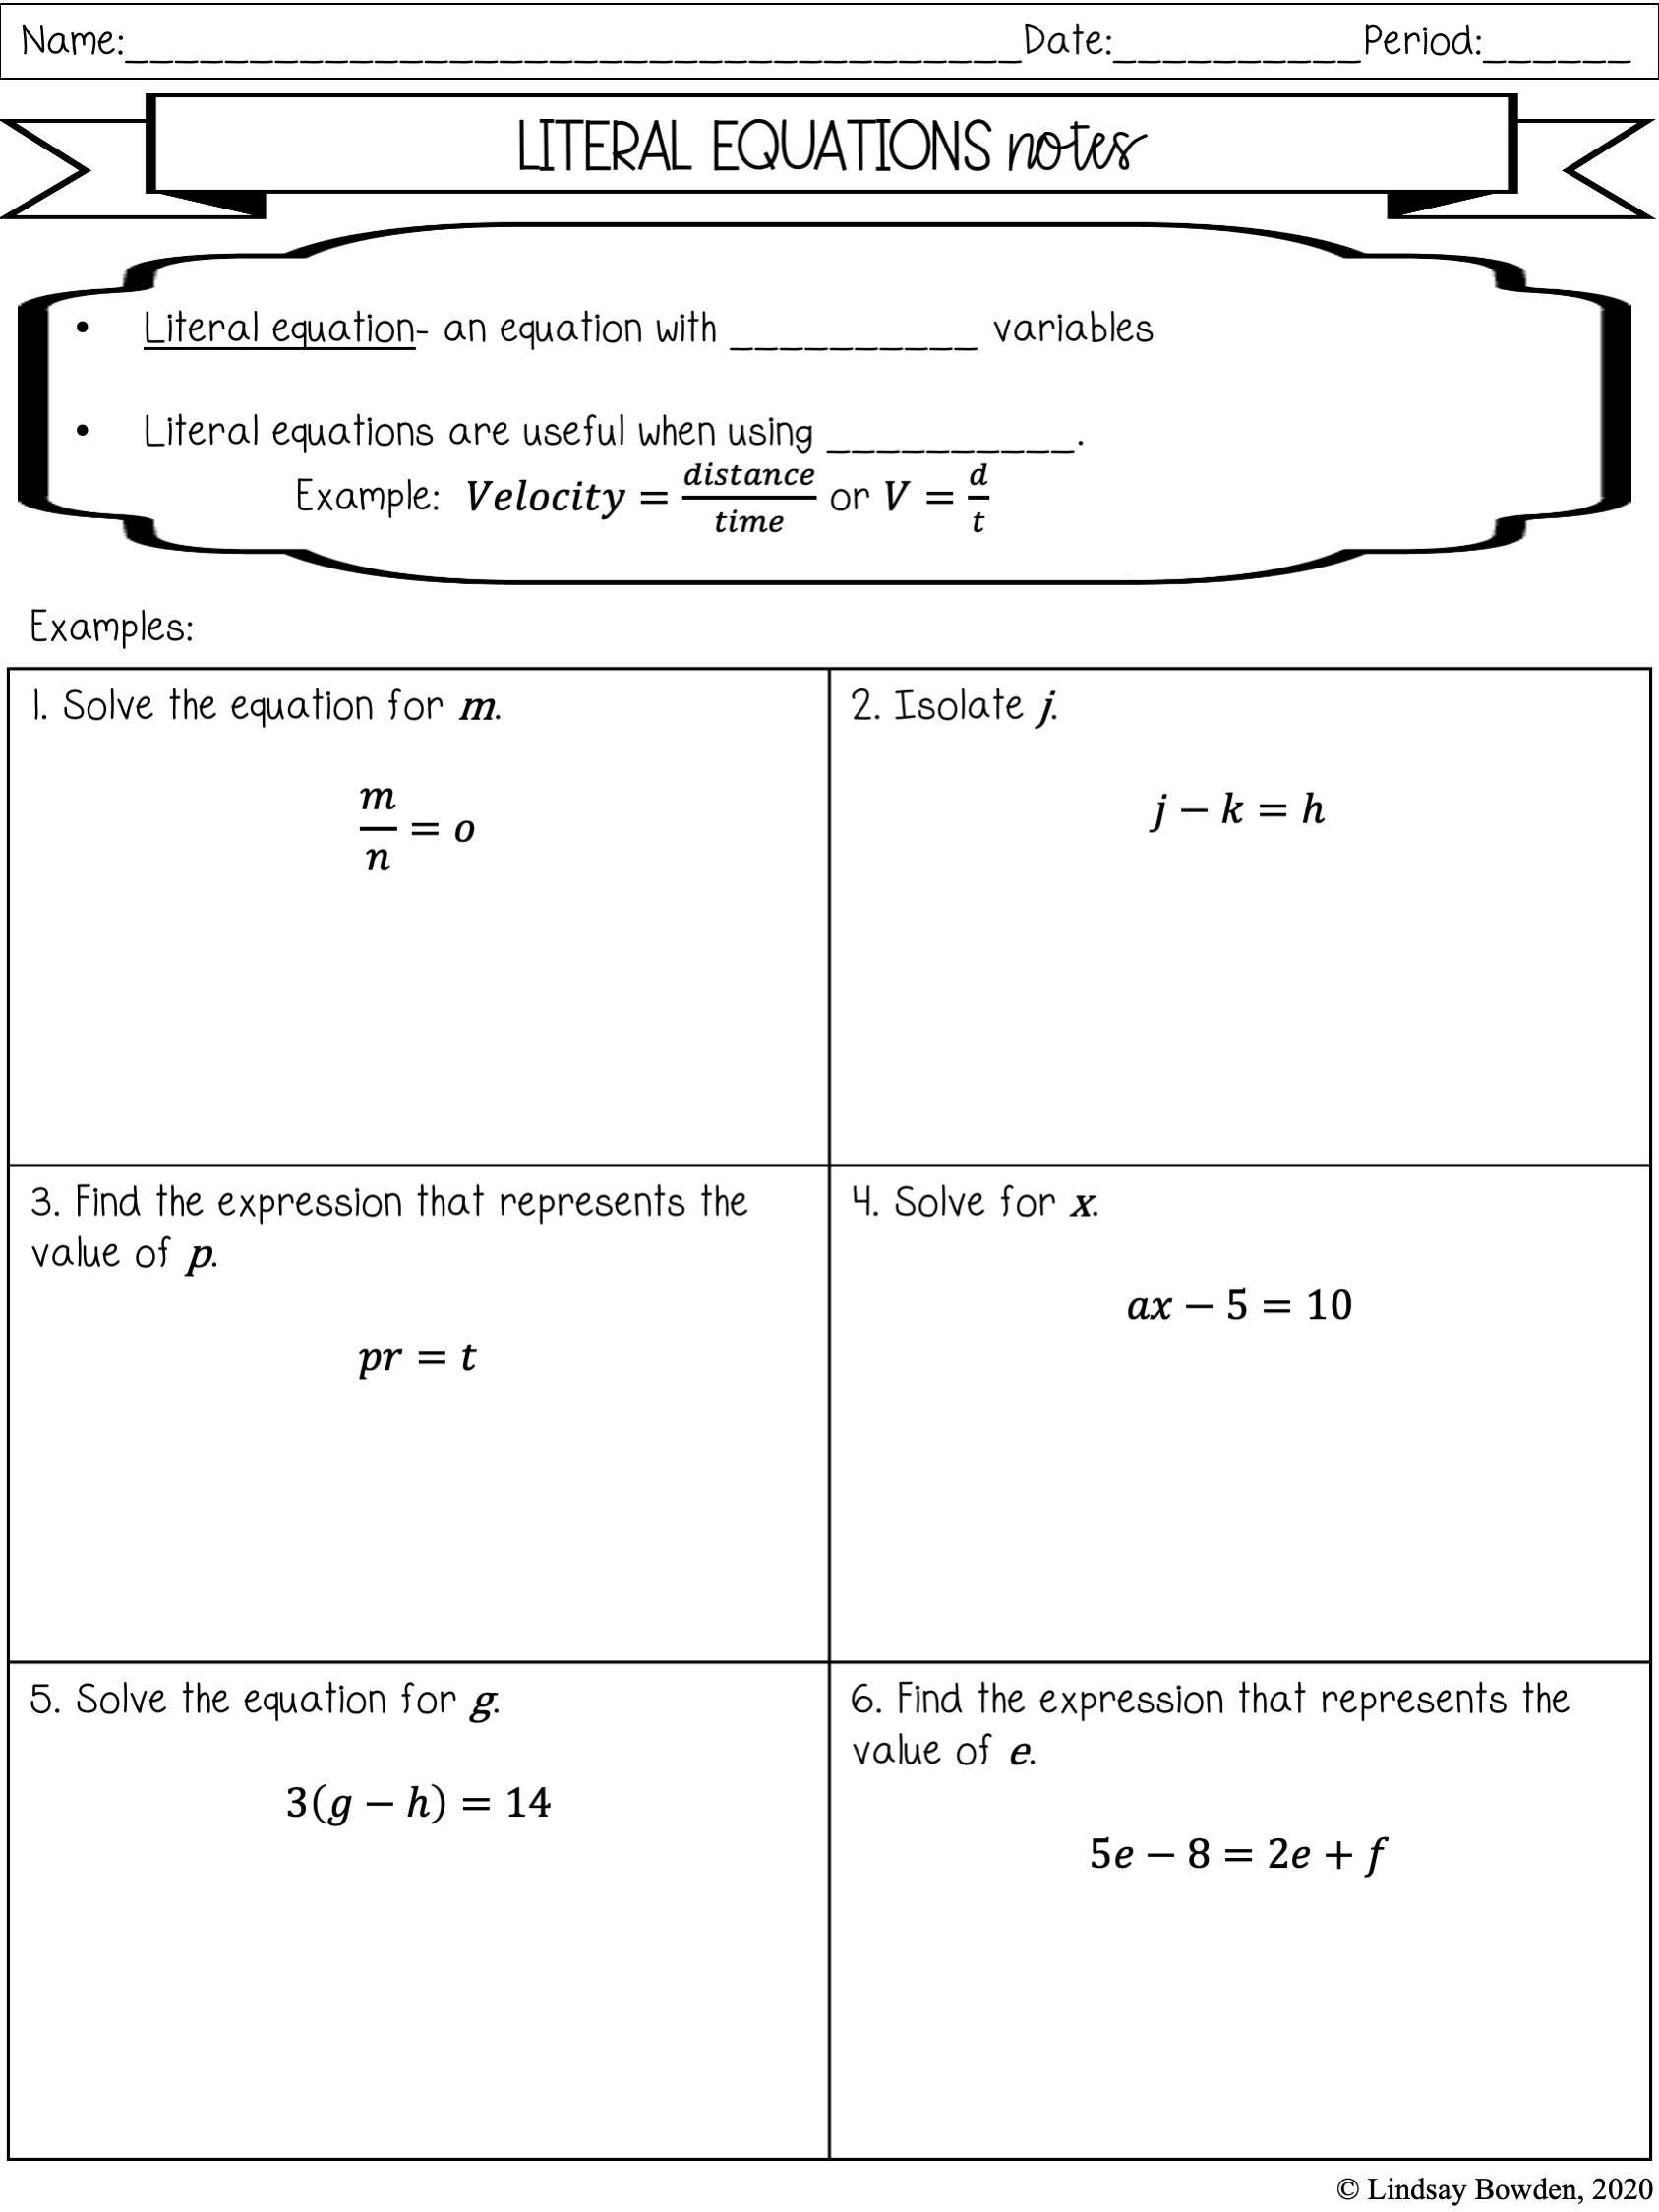 literal-equations-notes-and-worksheets-lindsay-bowden